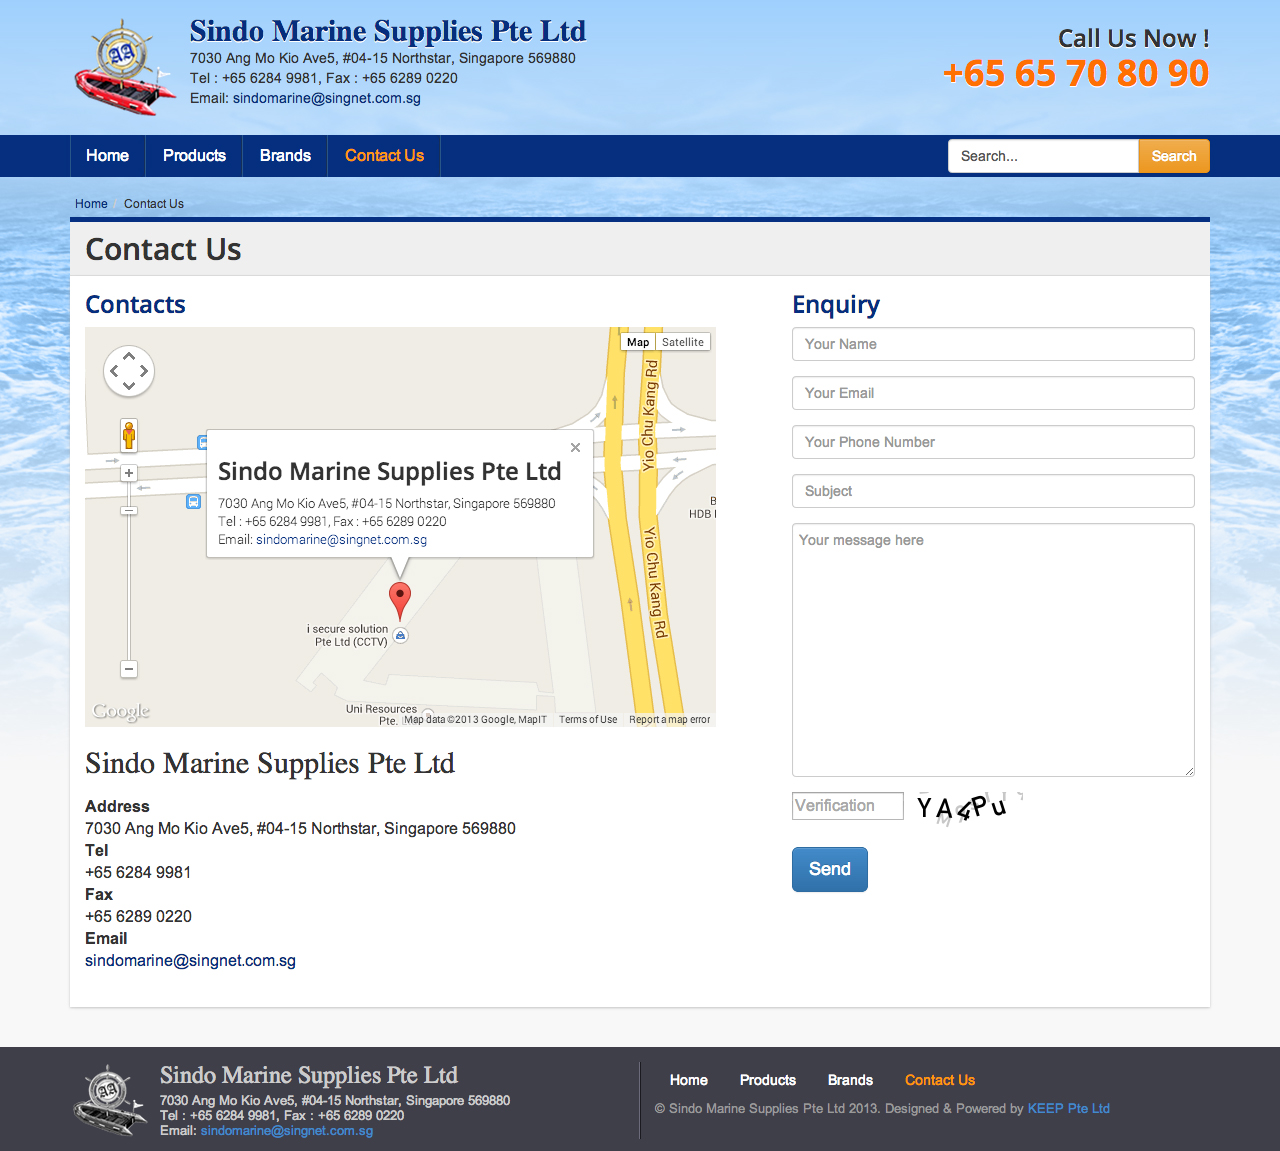 Sindo Marine Supplies Pte Ltd website contact us page